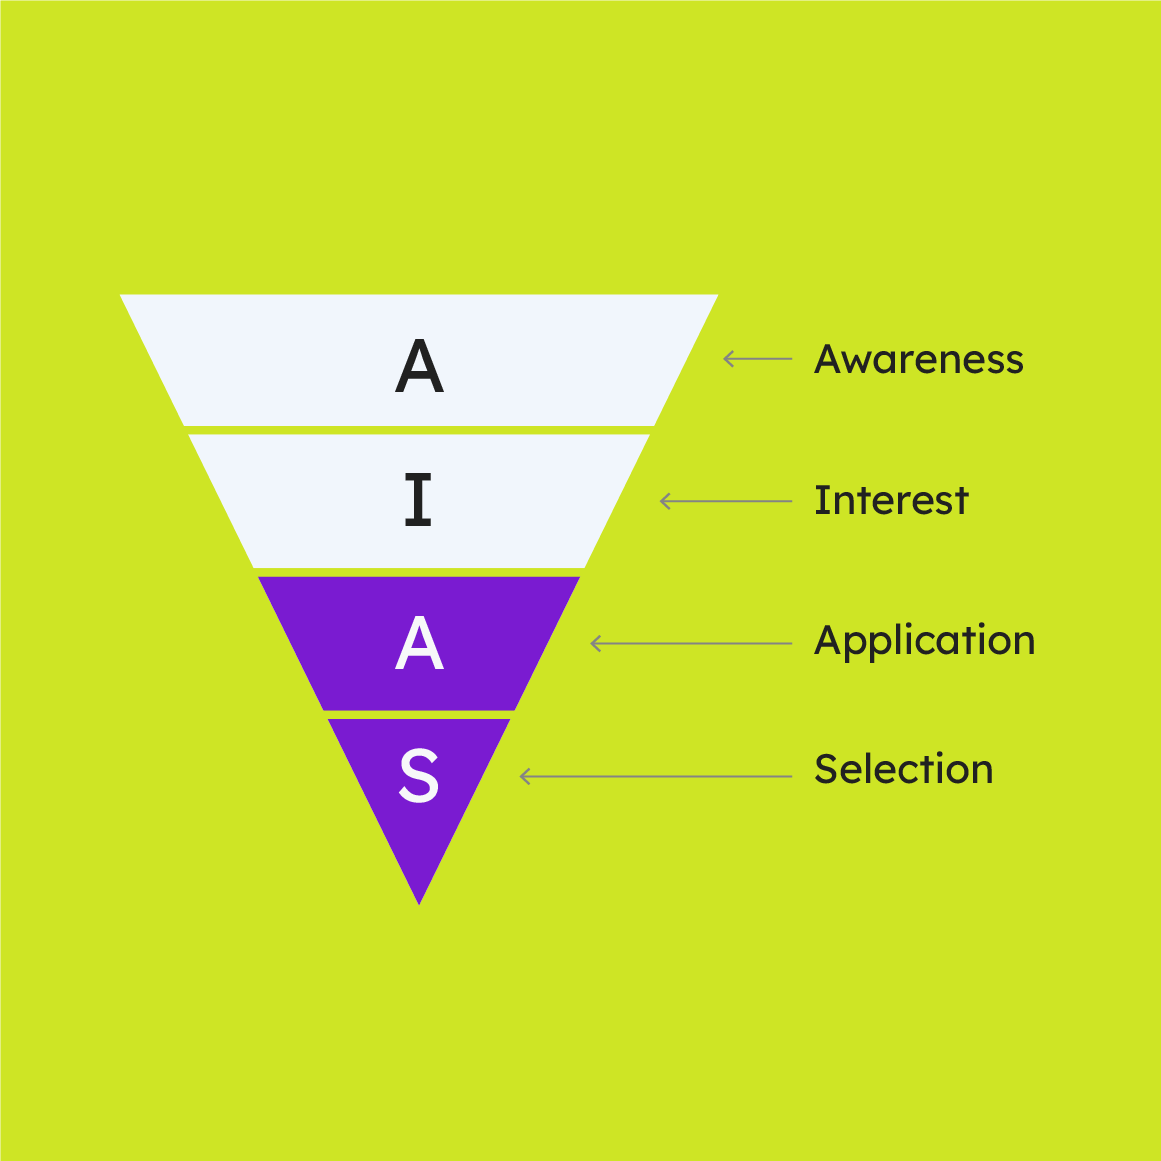 AIDA model of marketing